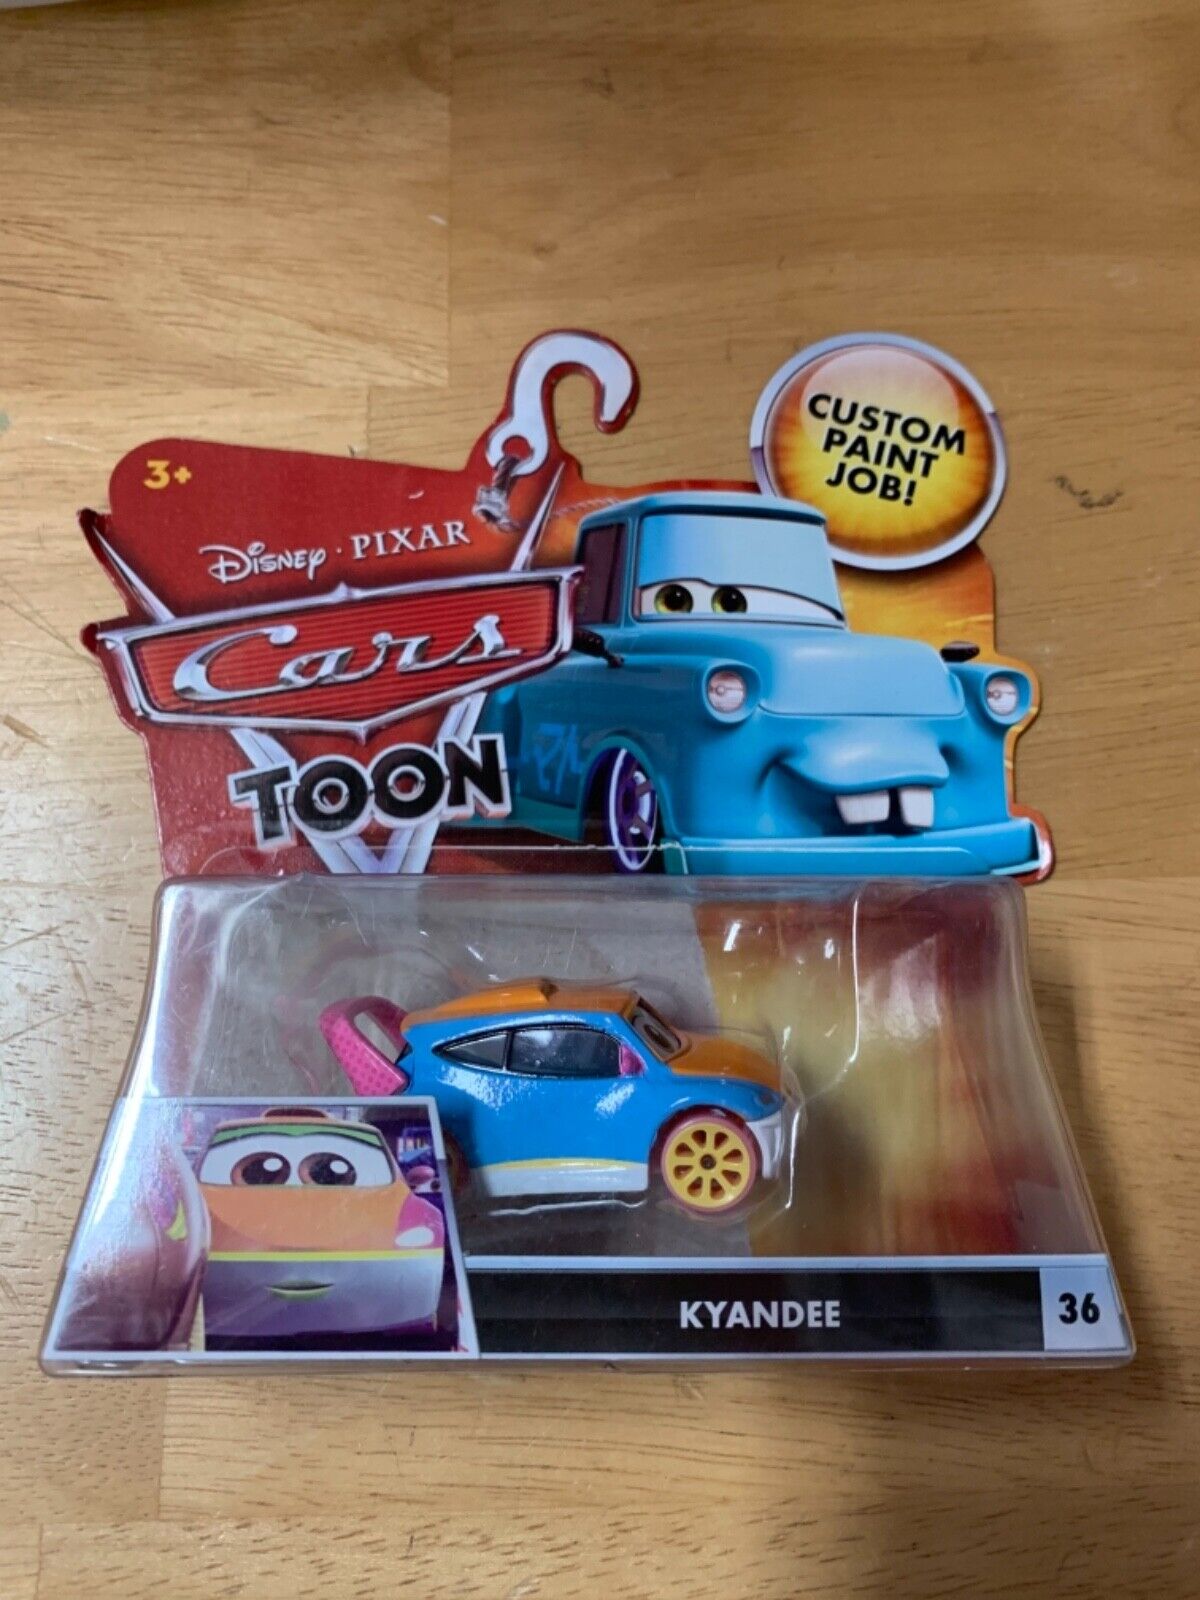 Disney Pixar Cars Toon Kyandee Opened RARE